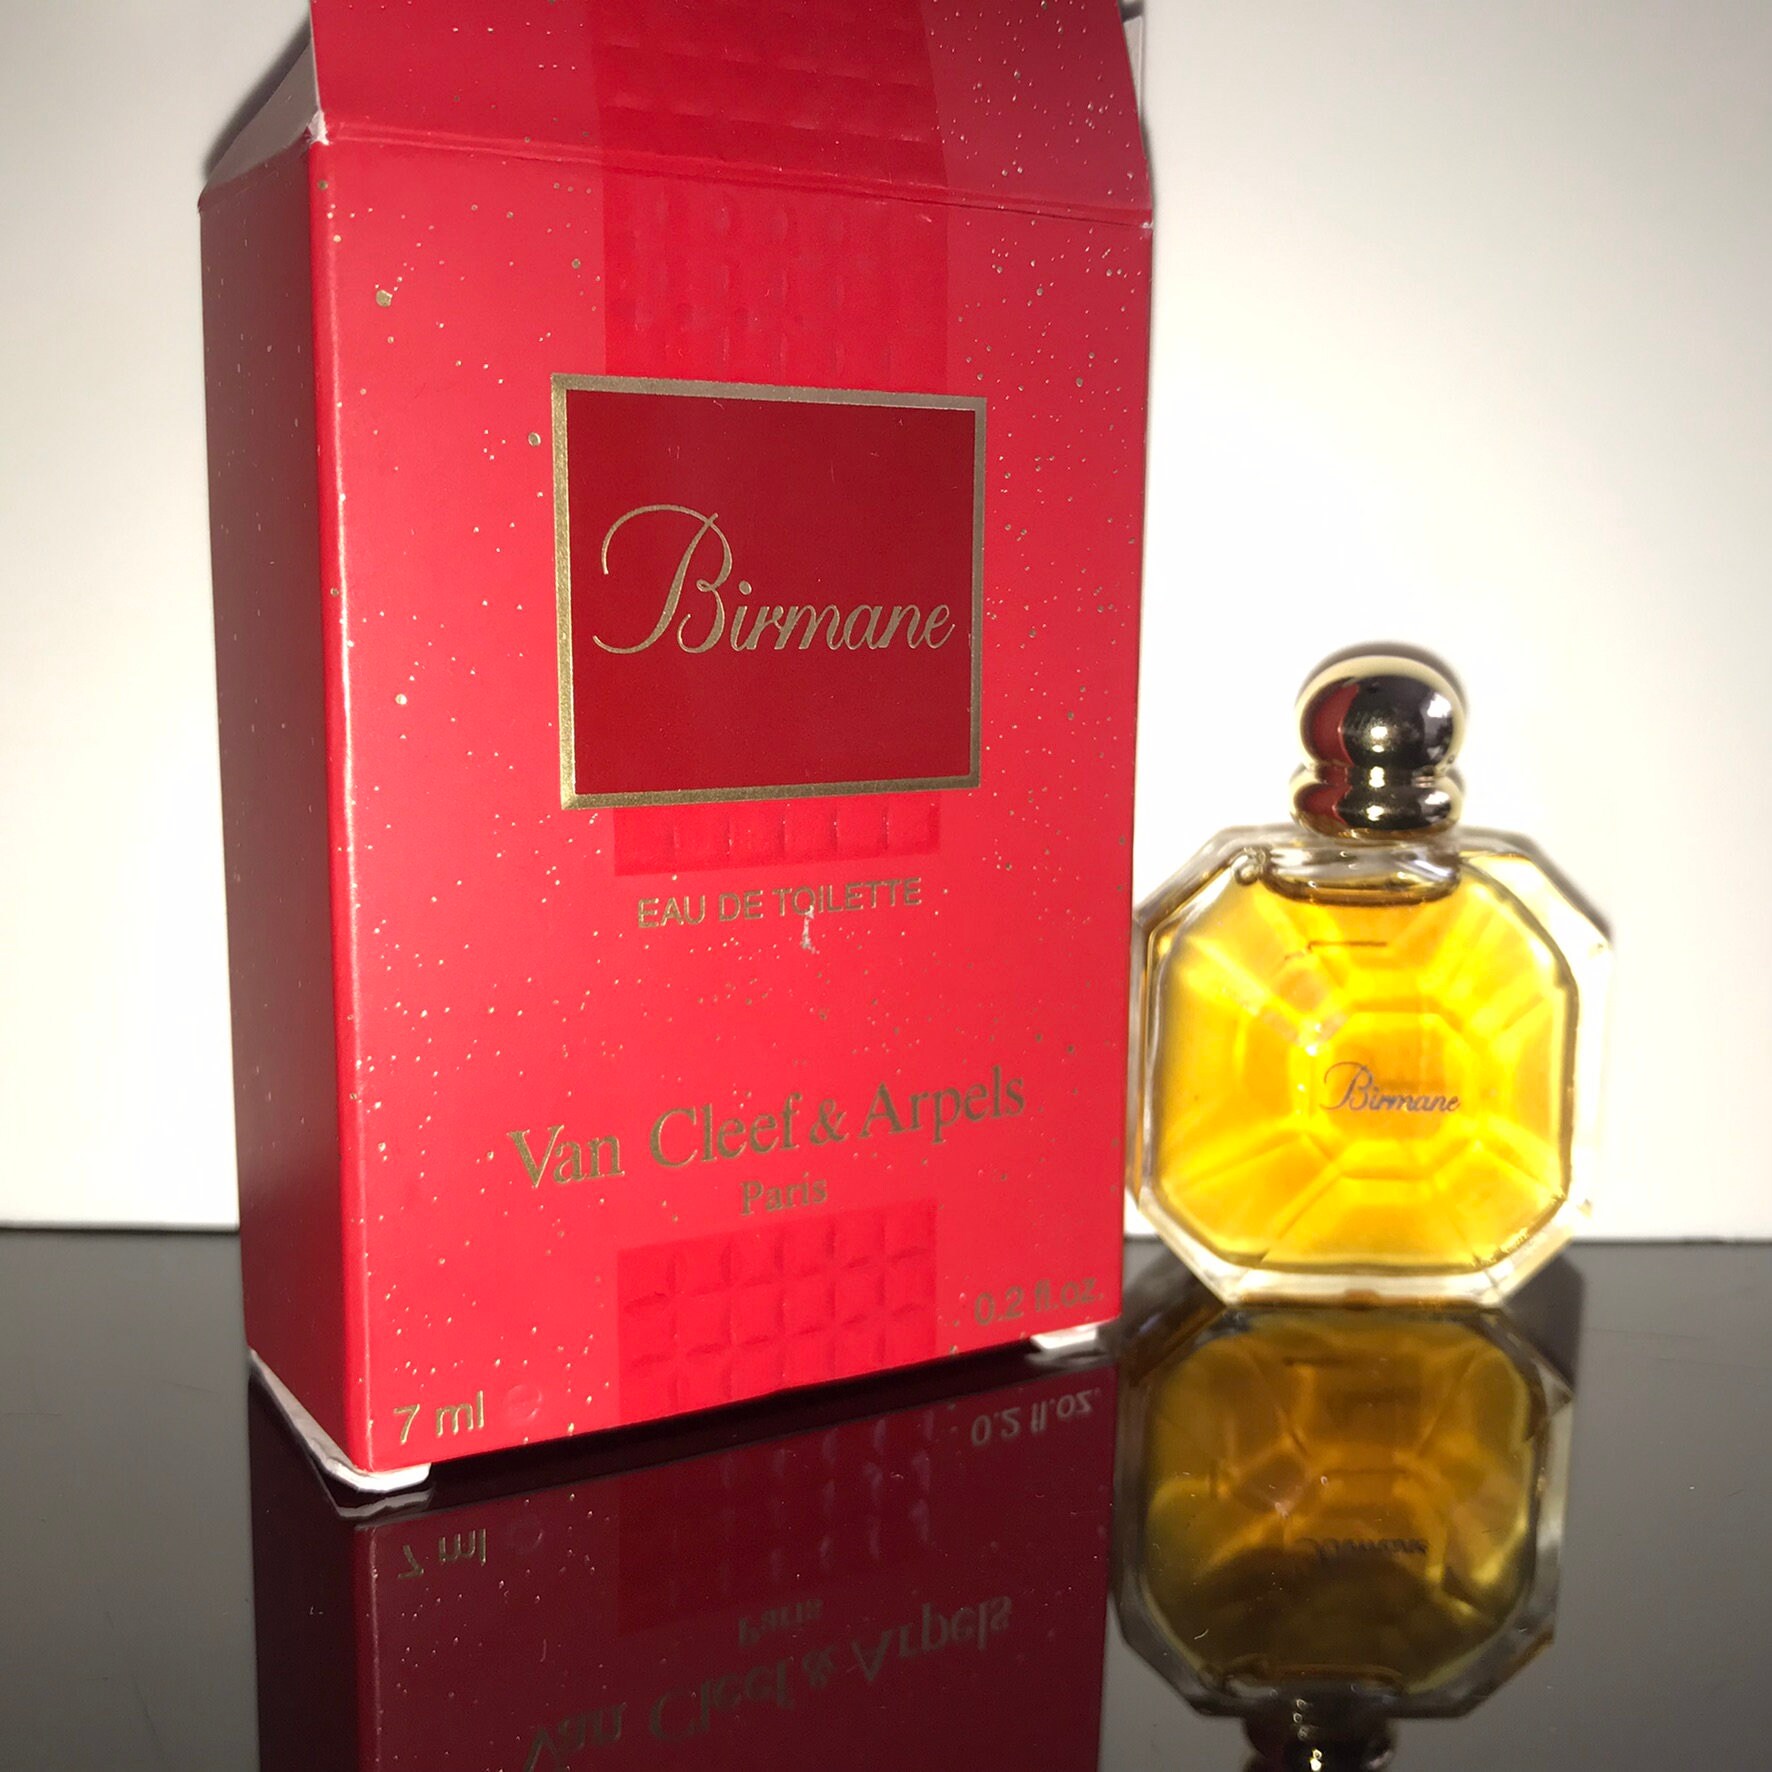 Van Cleef & Arpels - Birmane Eau De Toilette 7 Ml Vintage Rar Box von miniperfumes